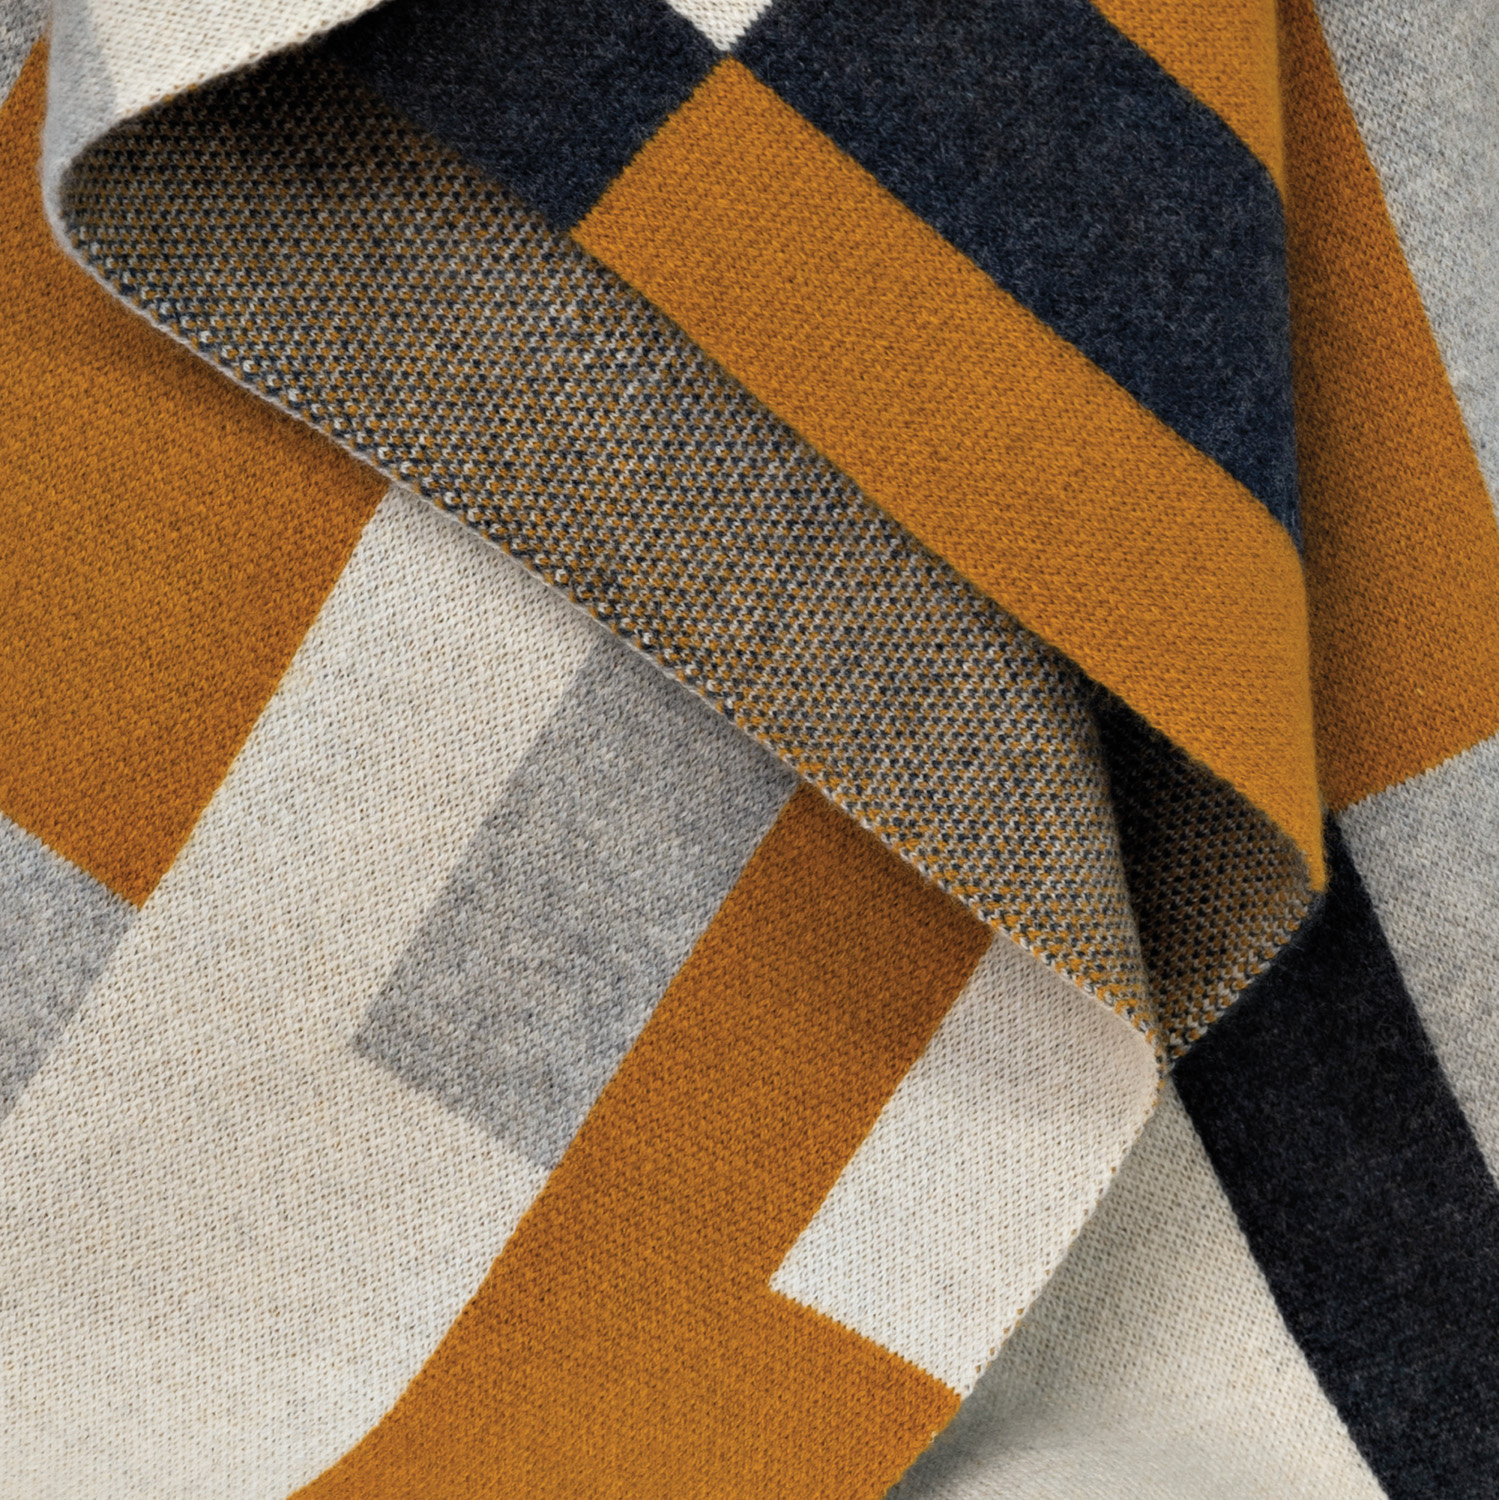 orange, black, grey and white striped textile